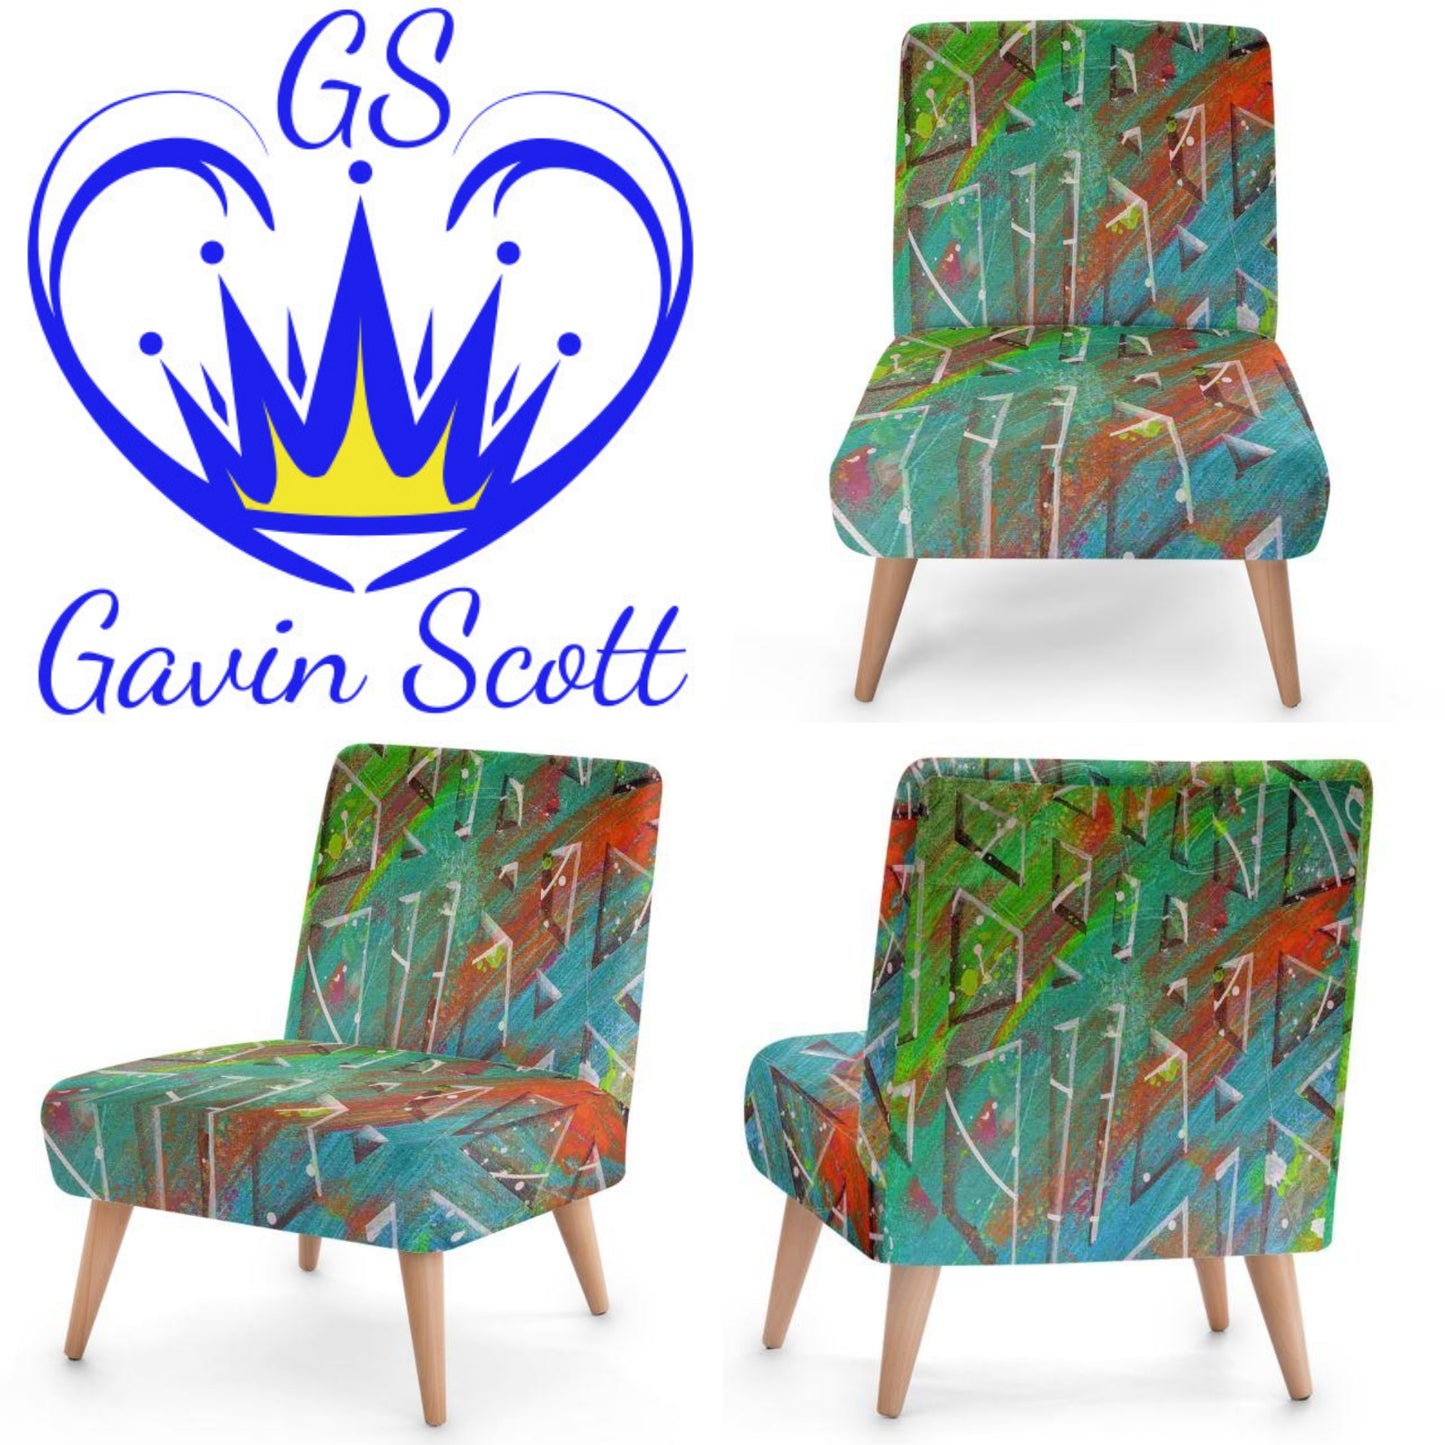 Gavin Scott Chill Chair